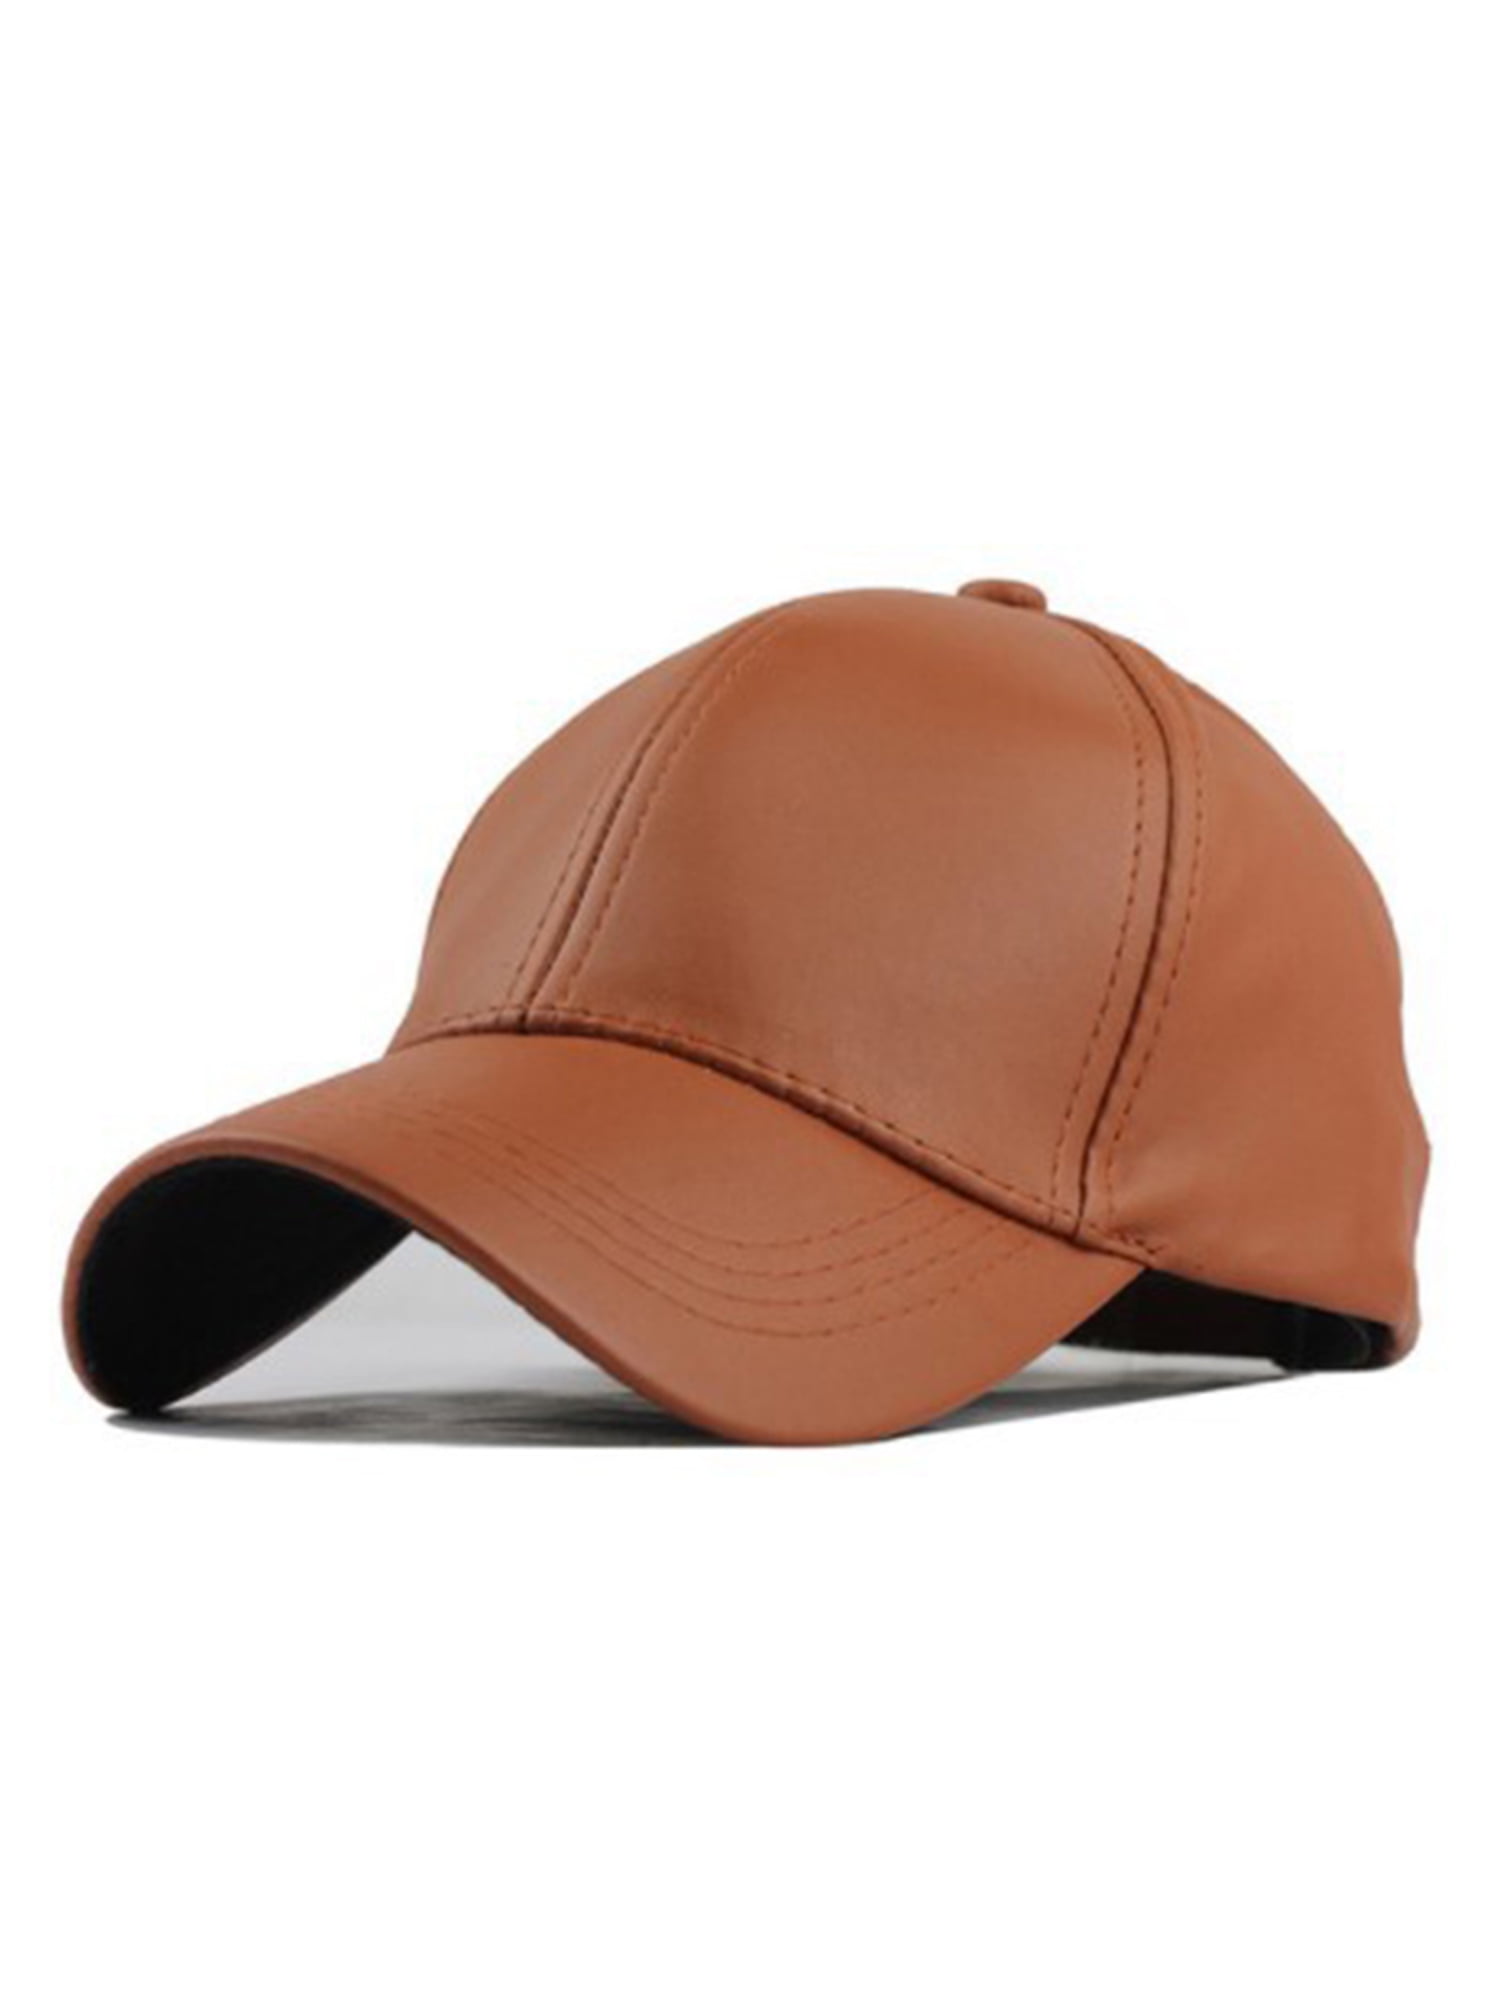 Men Women Leather Adjustable Baseball Outdoor Cap Unisex Sport Visor Sun Hat 